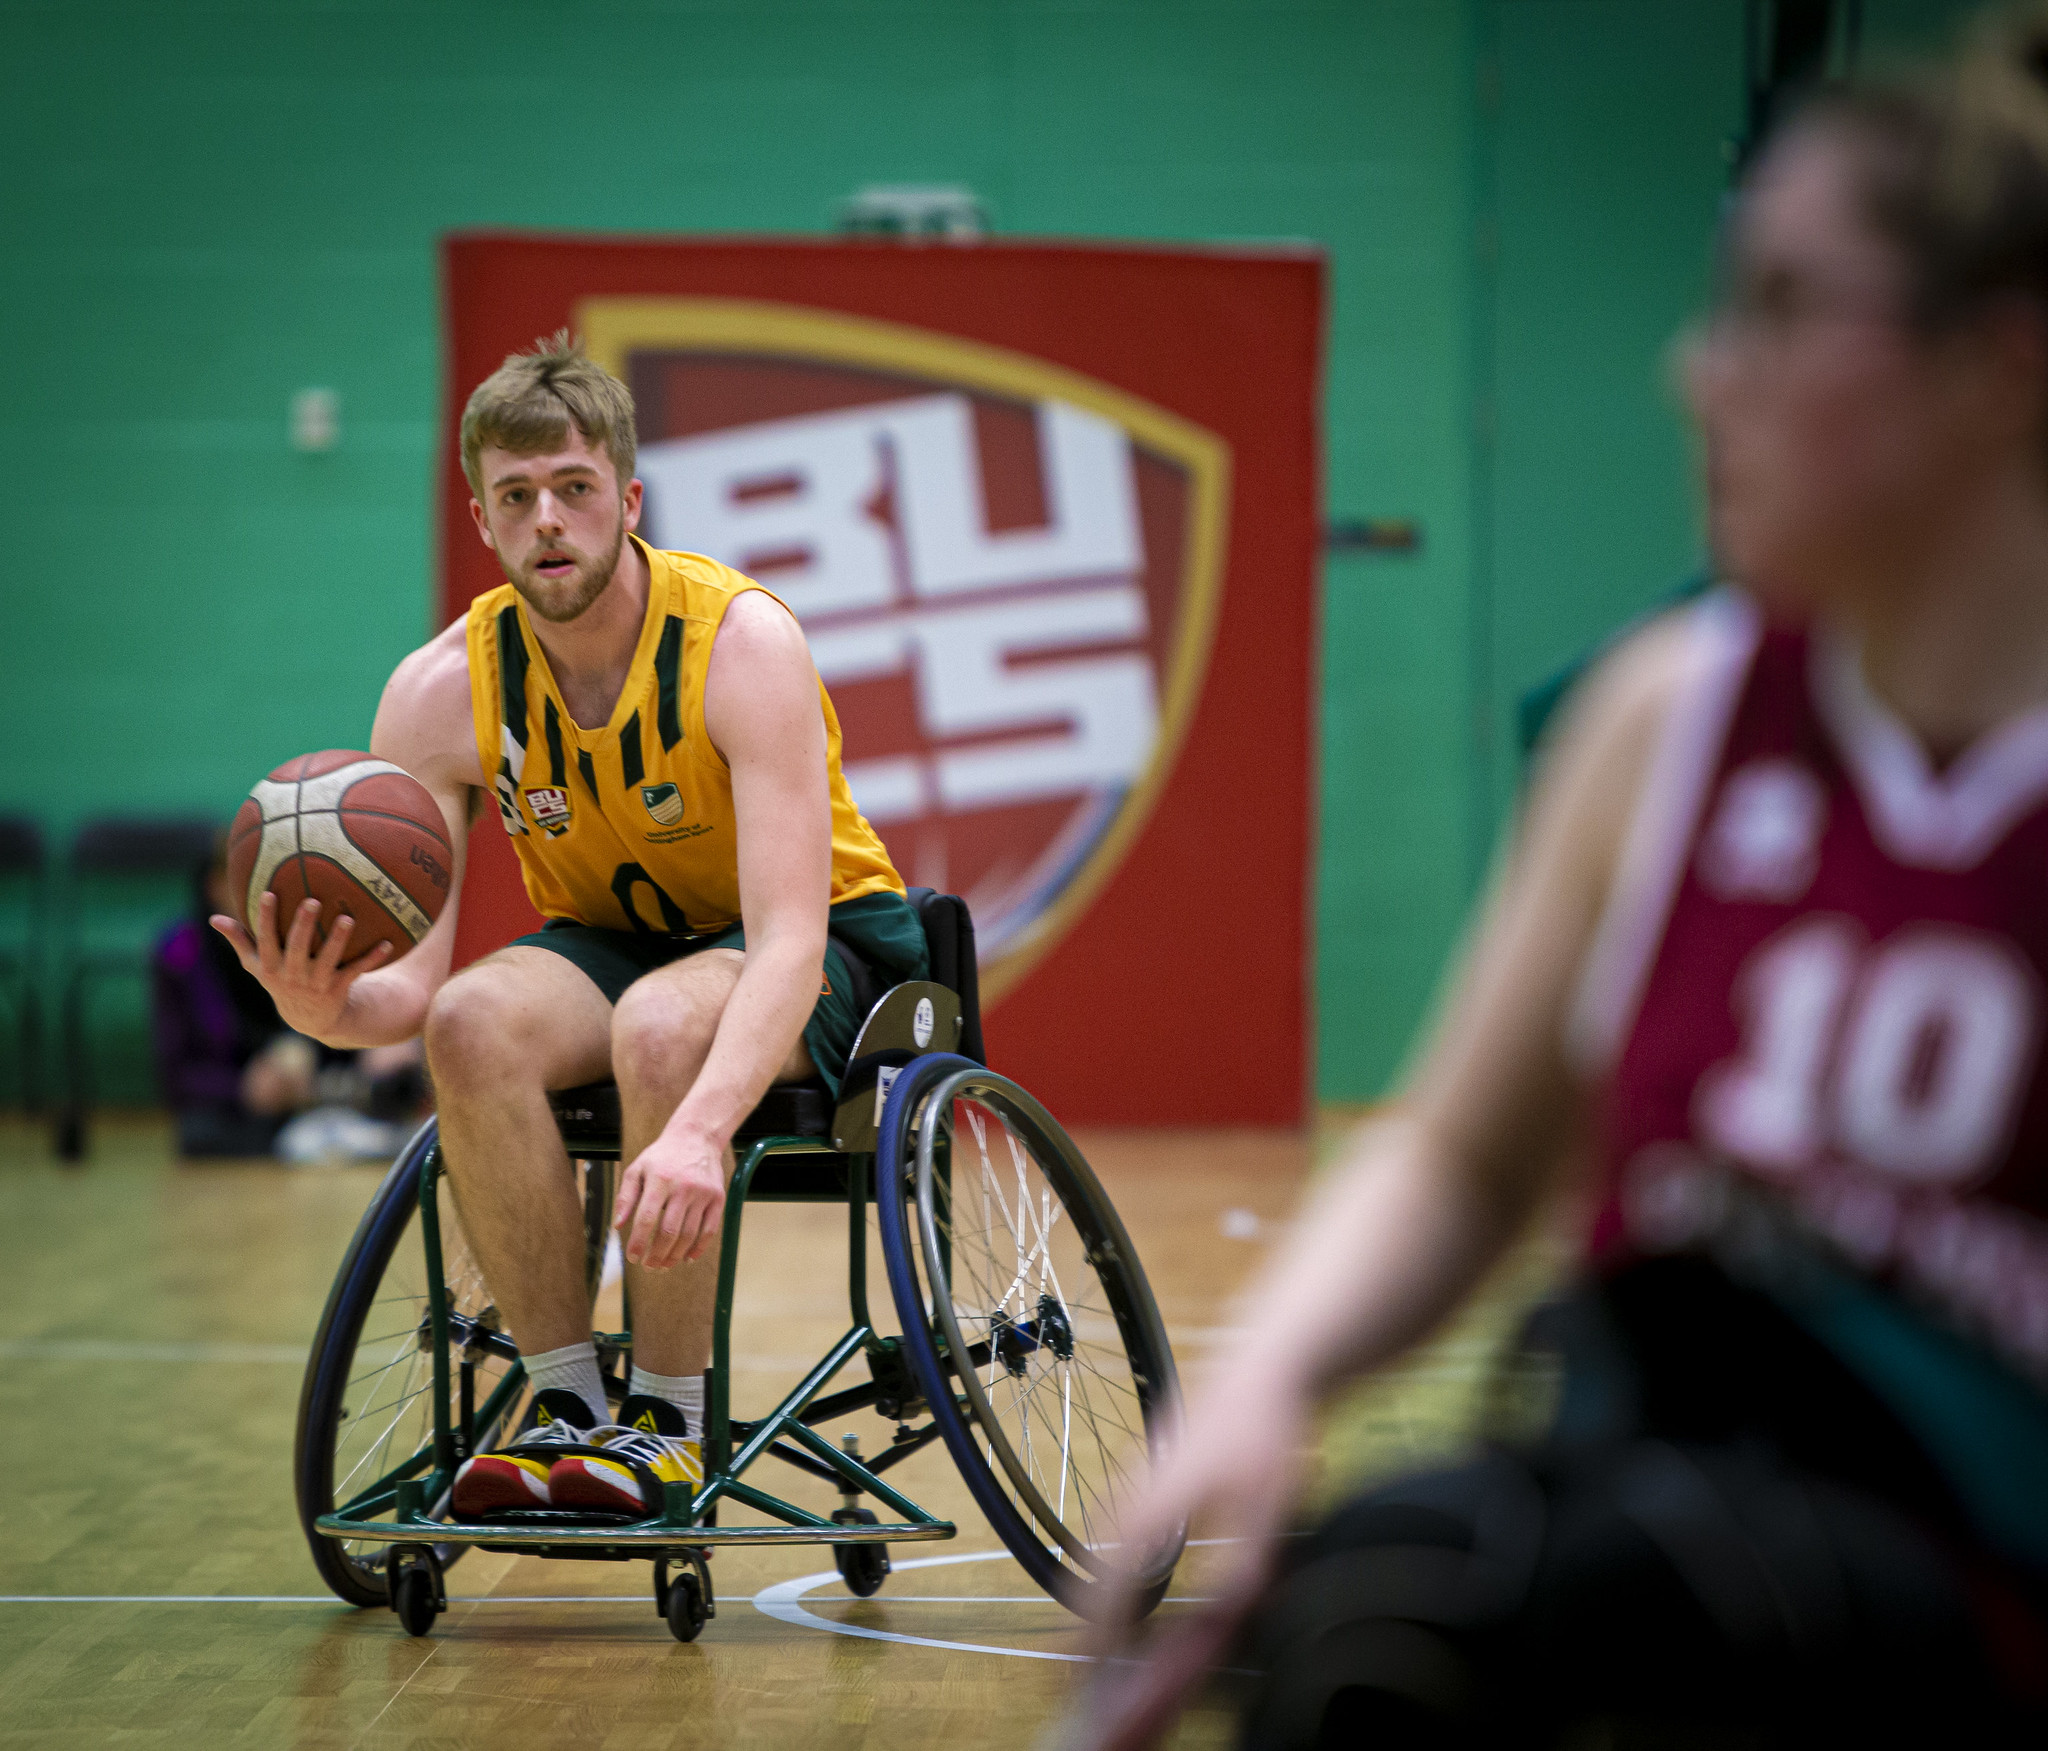 Wheelchair Basketball at the University of Nottingham